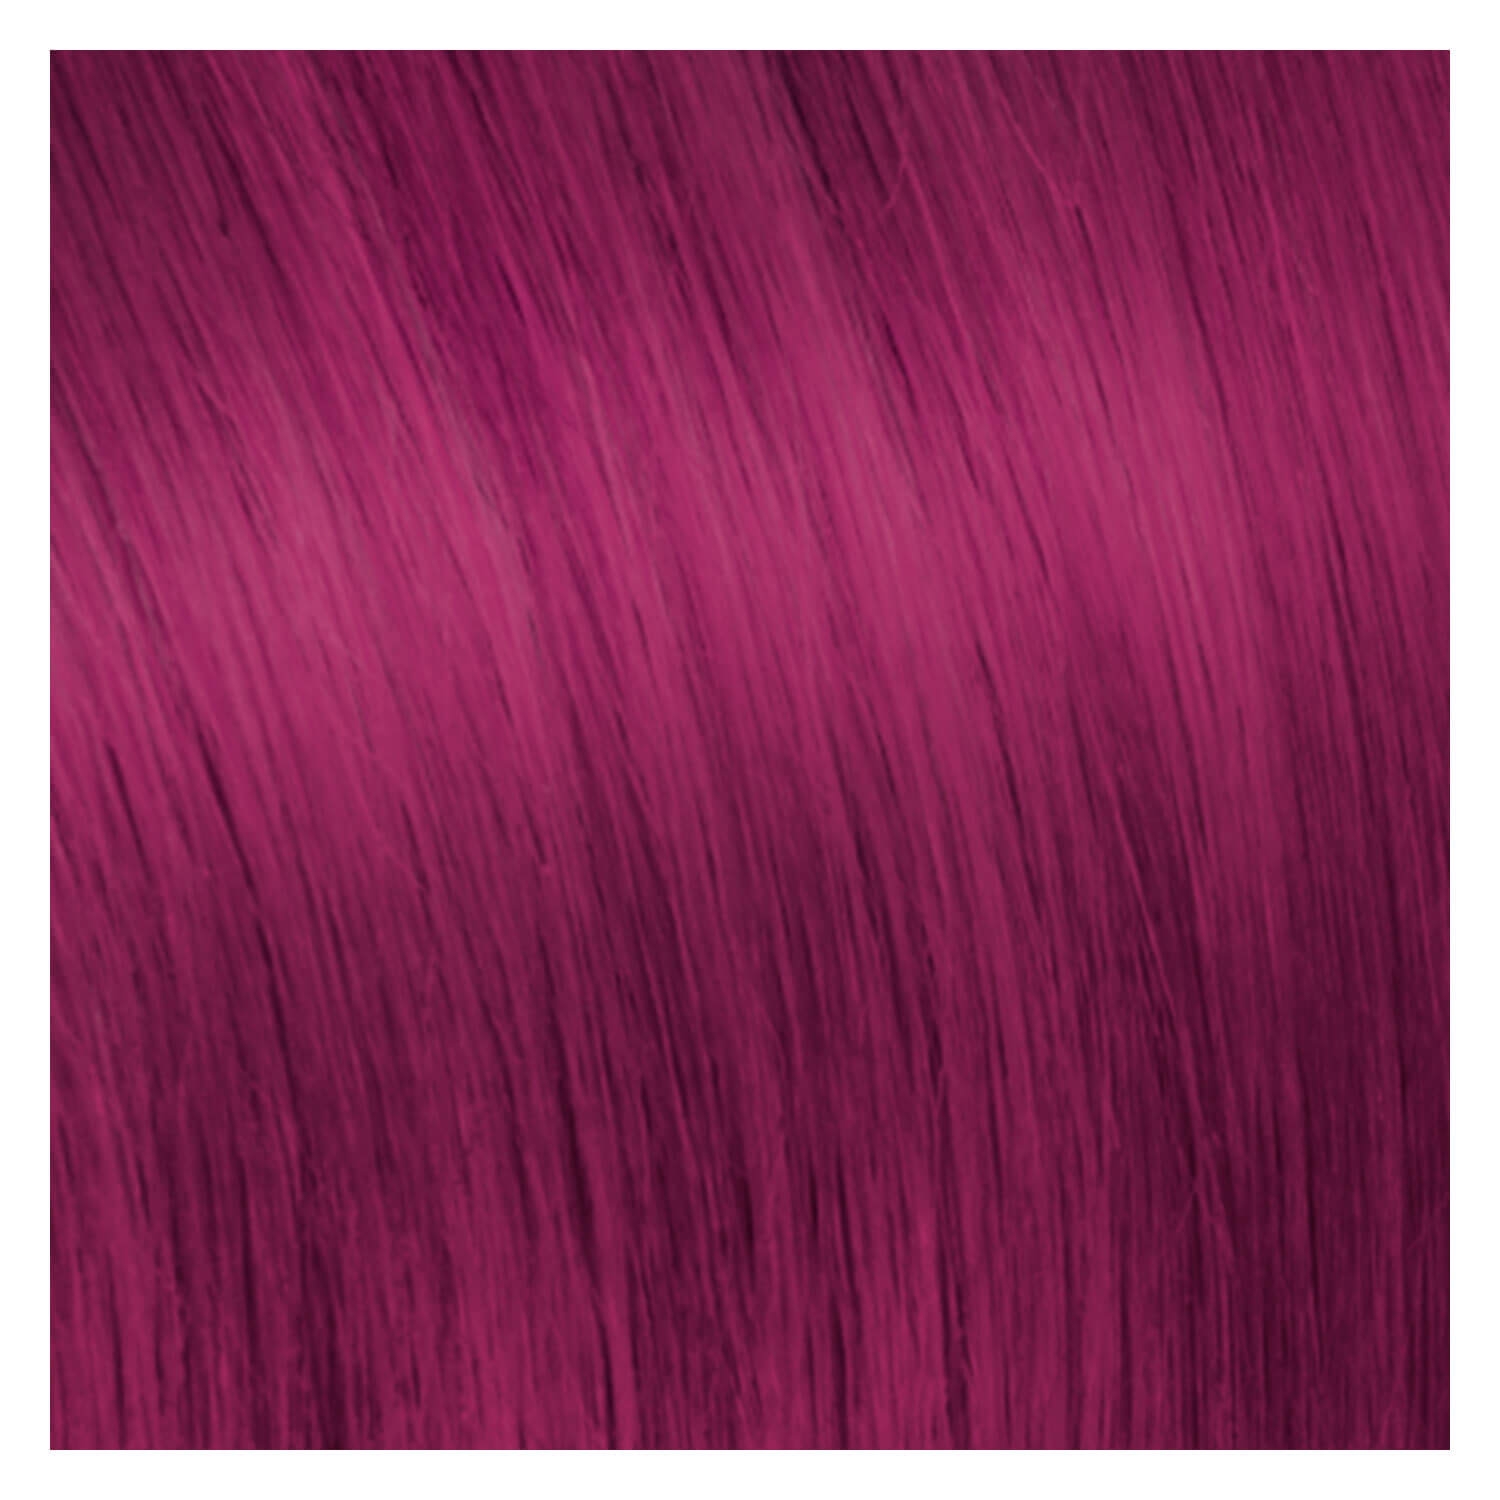 Produktbild von SHE Bonding-System Hair Extensions Fantasy Straight - Rötlich Violett 55/60cm